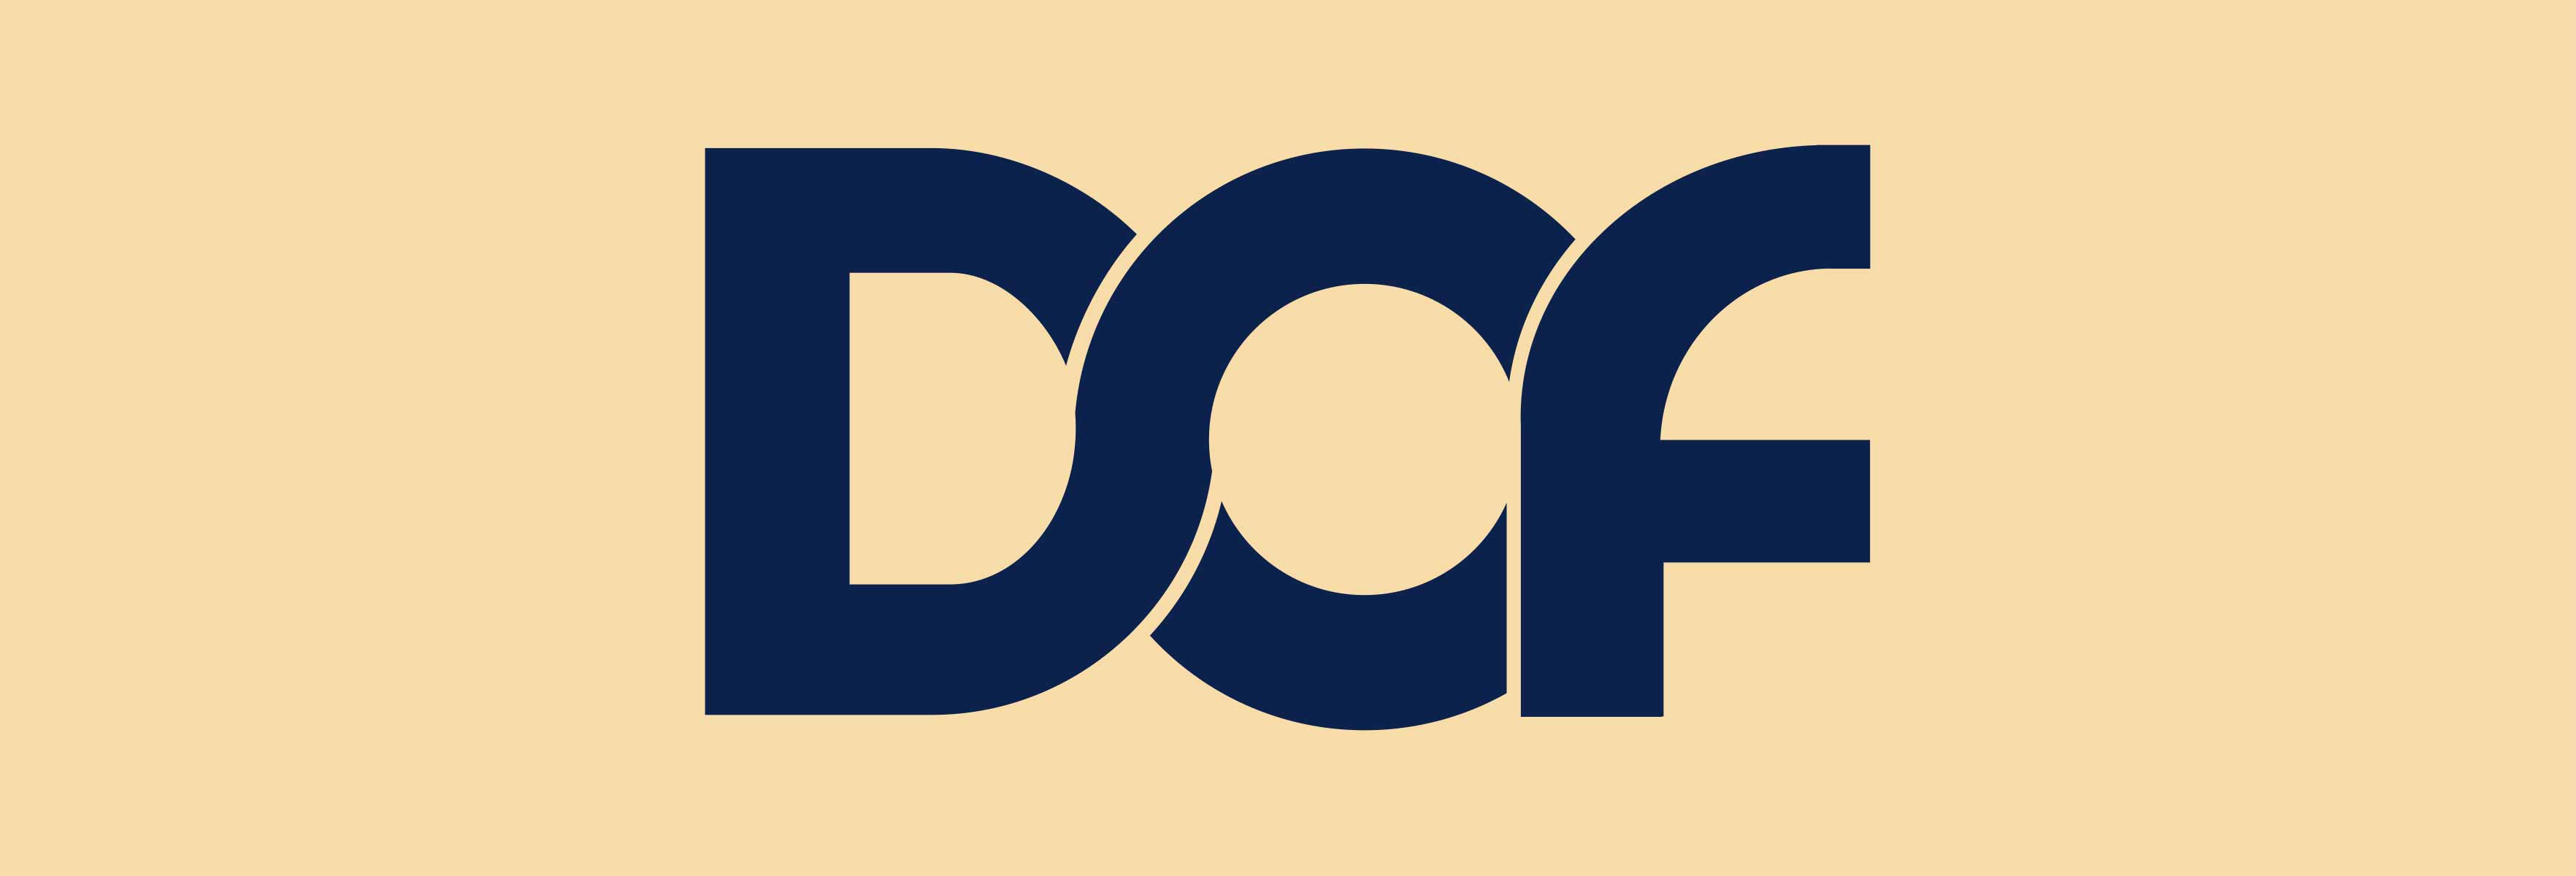 DOF logo on  a pastel peach background